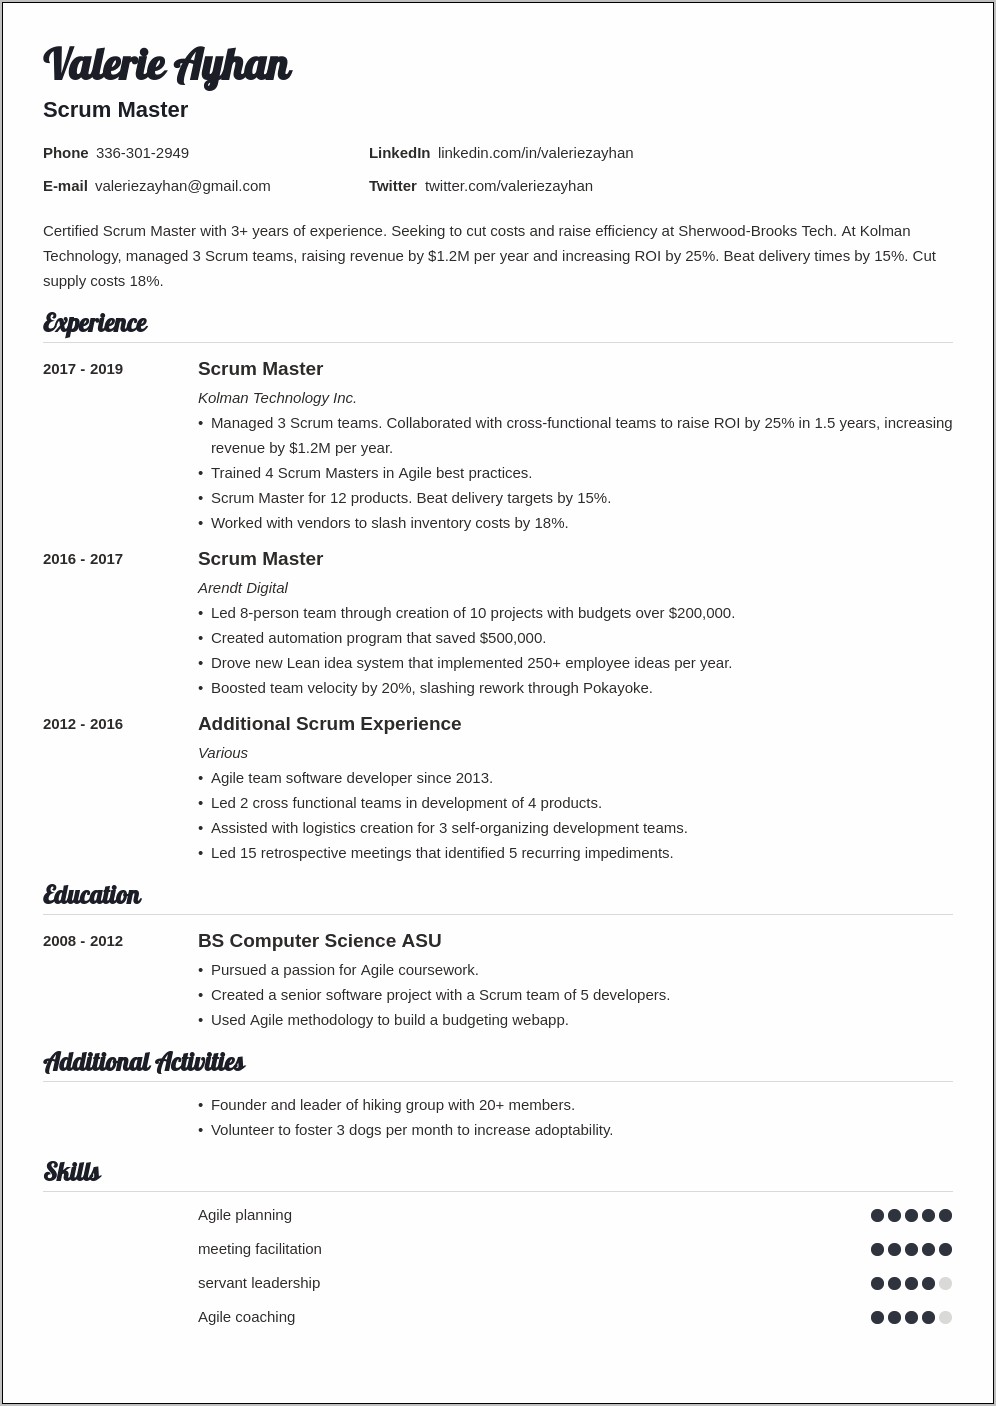 Job Description For Scrum Master For Resume